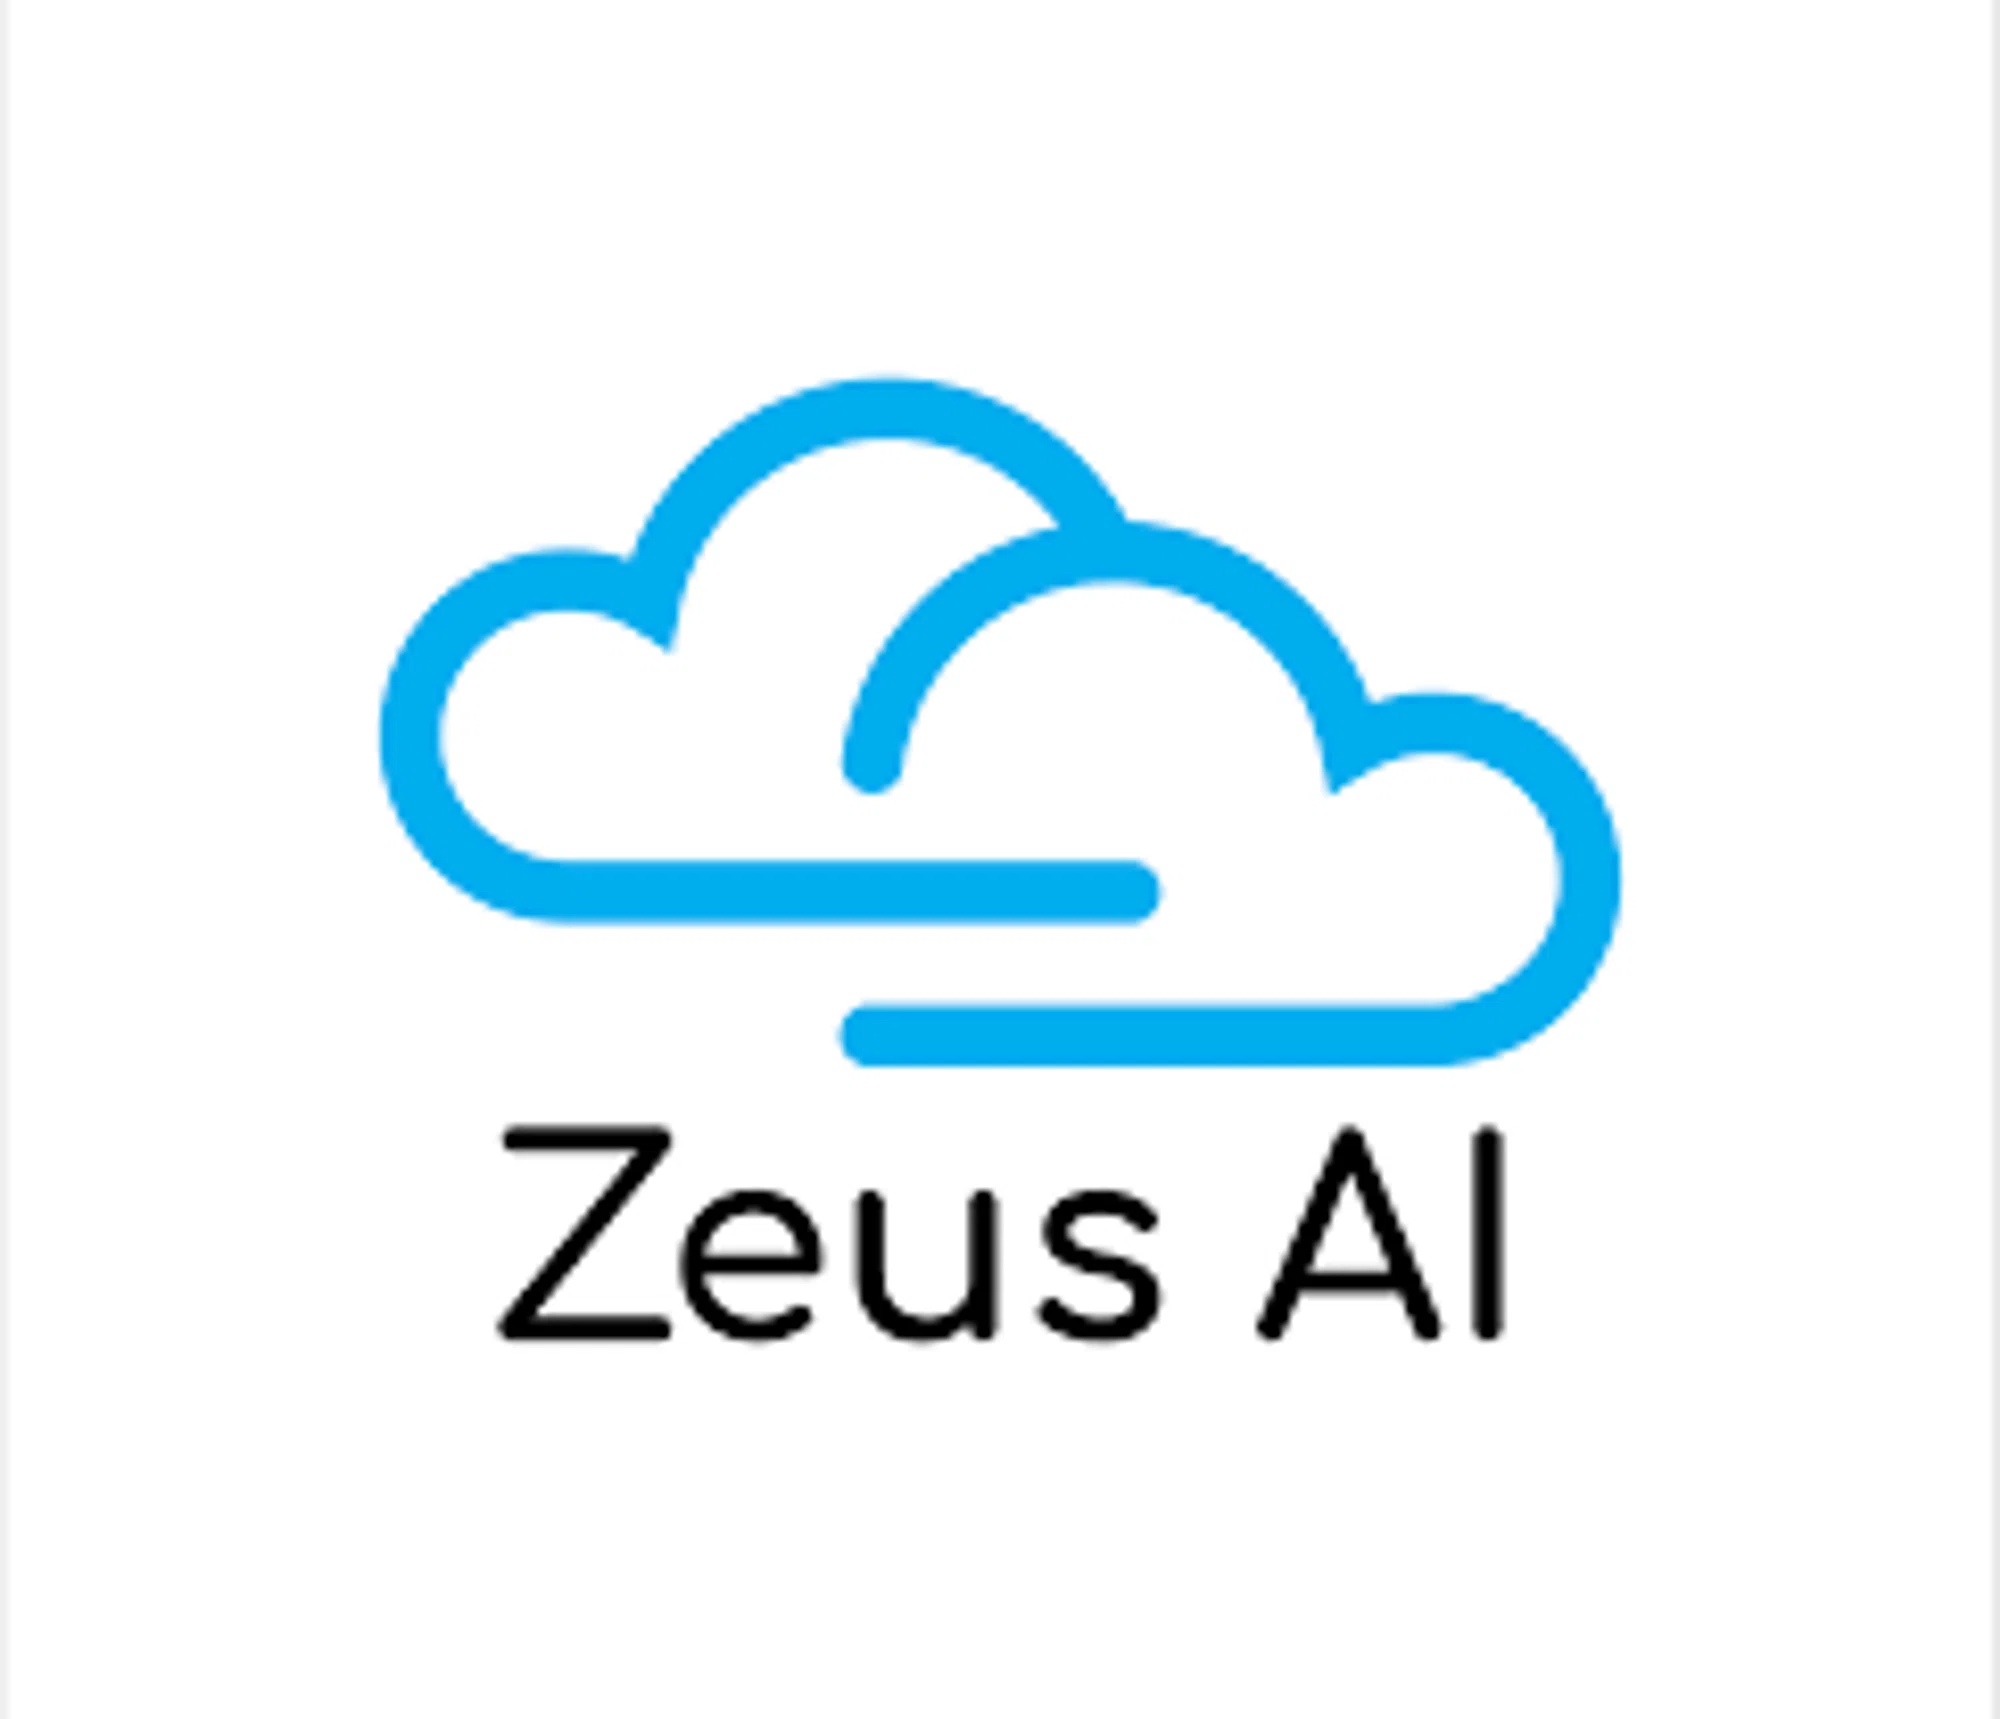 Zeus AI